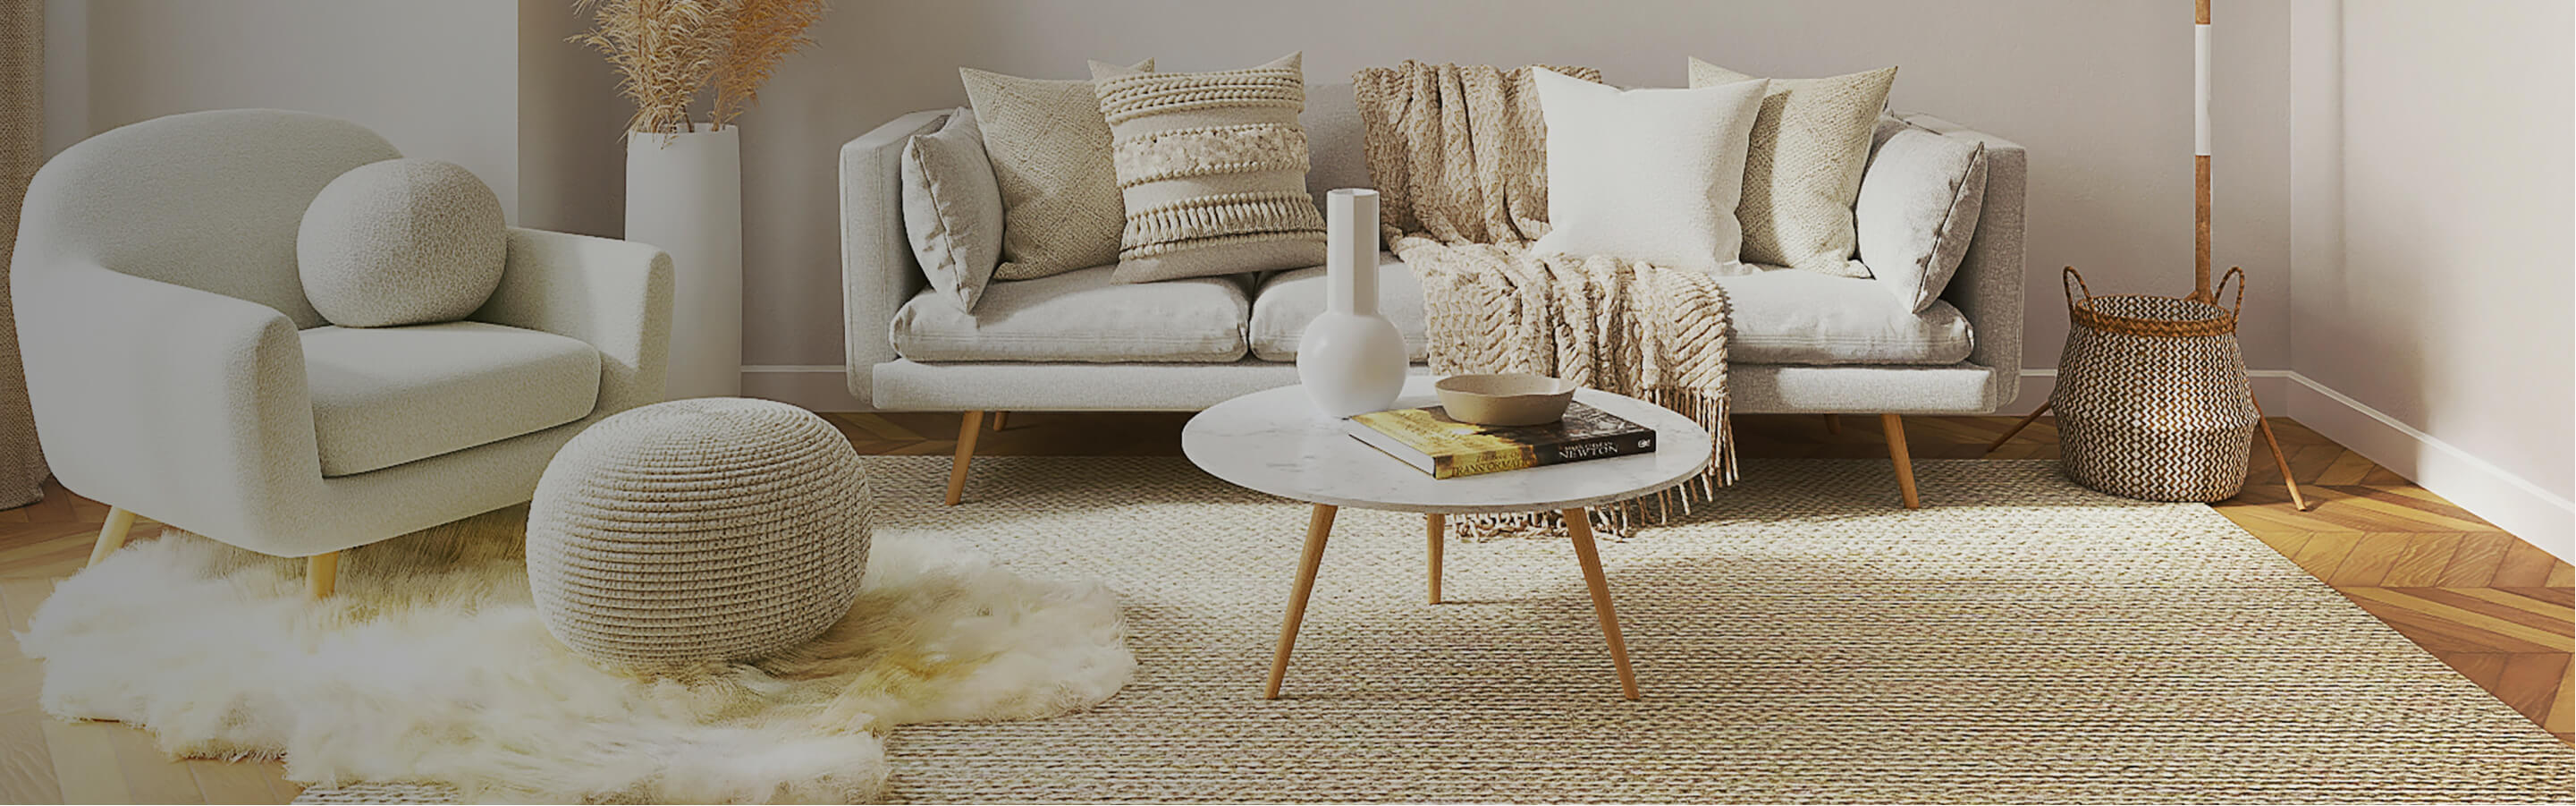 luxury vinyl flooring in a bright, neutral toned living room